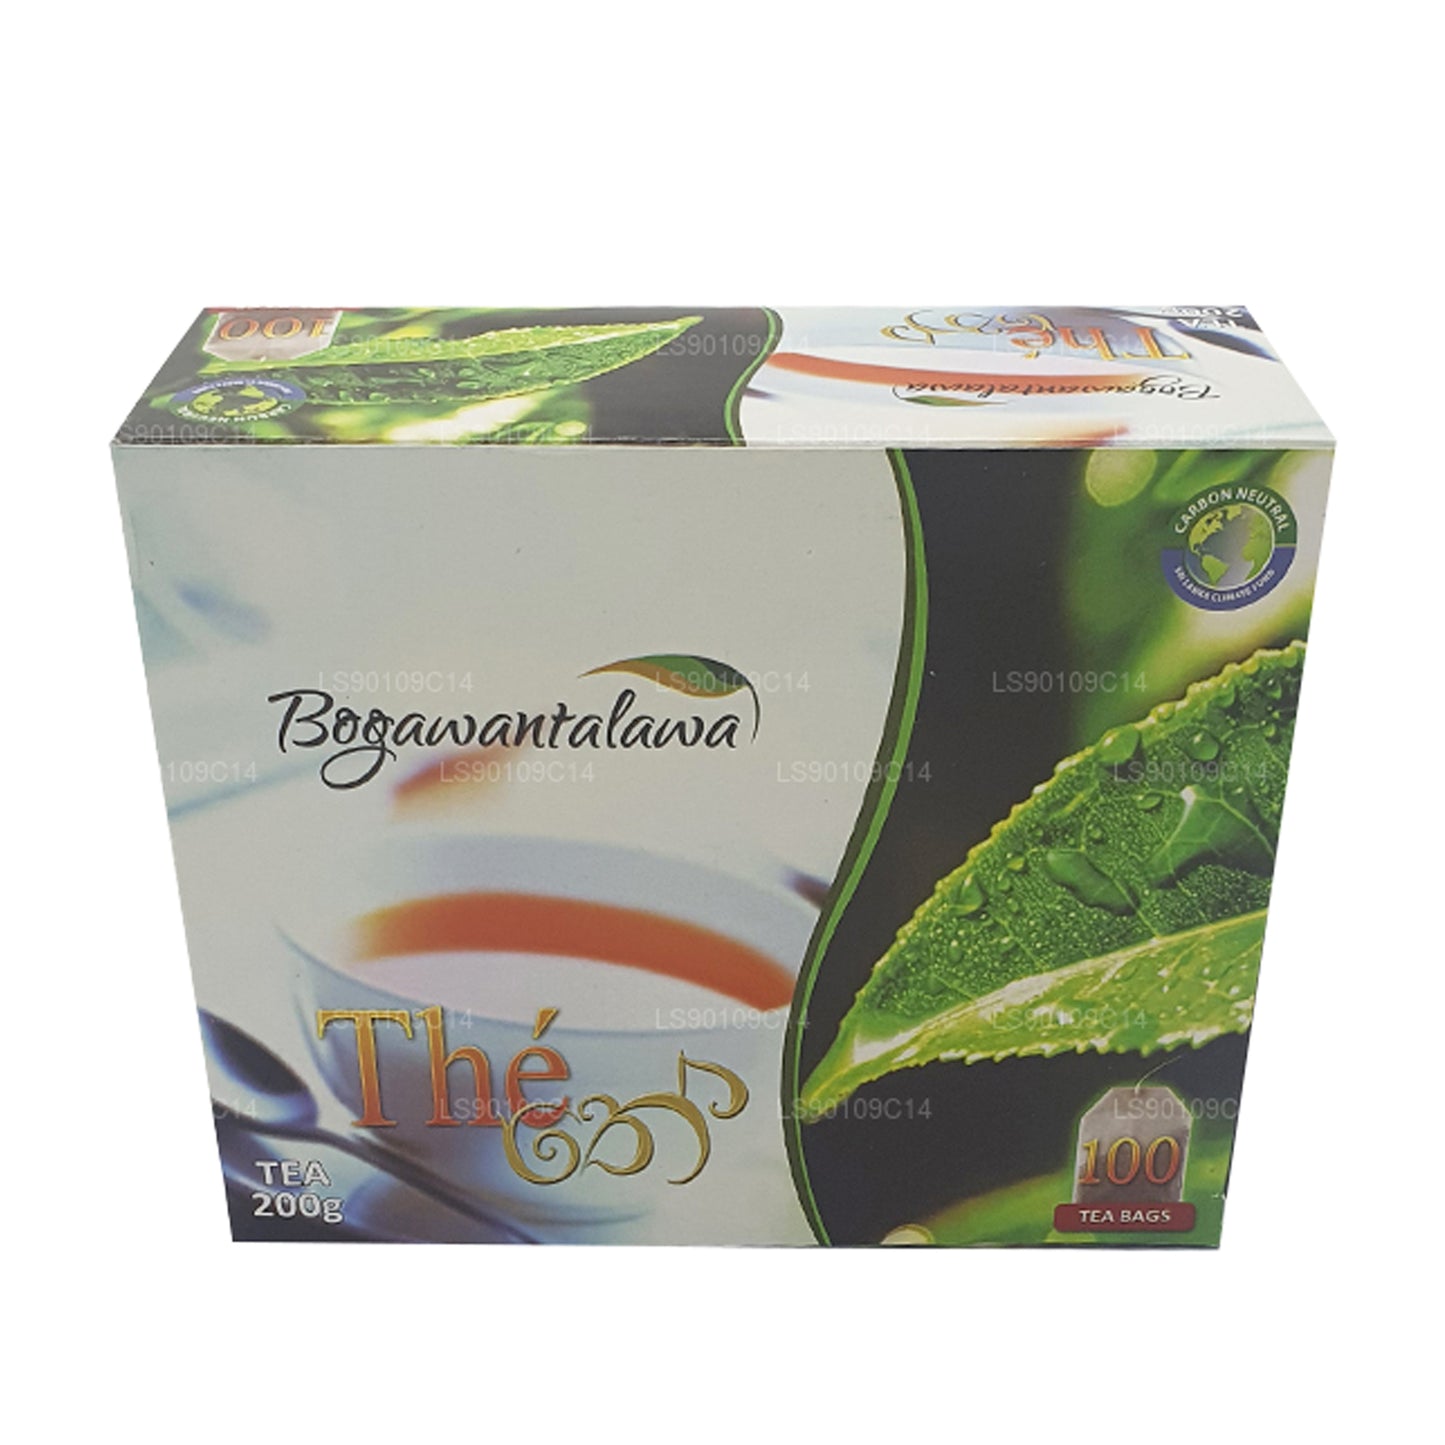 Bogawantalawa Herbata (200g) 100 torebek